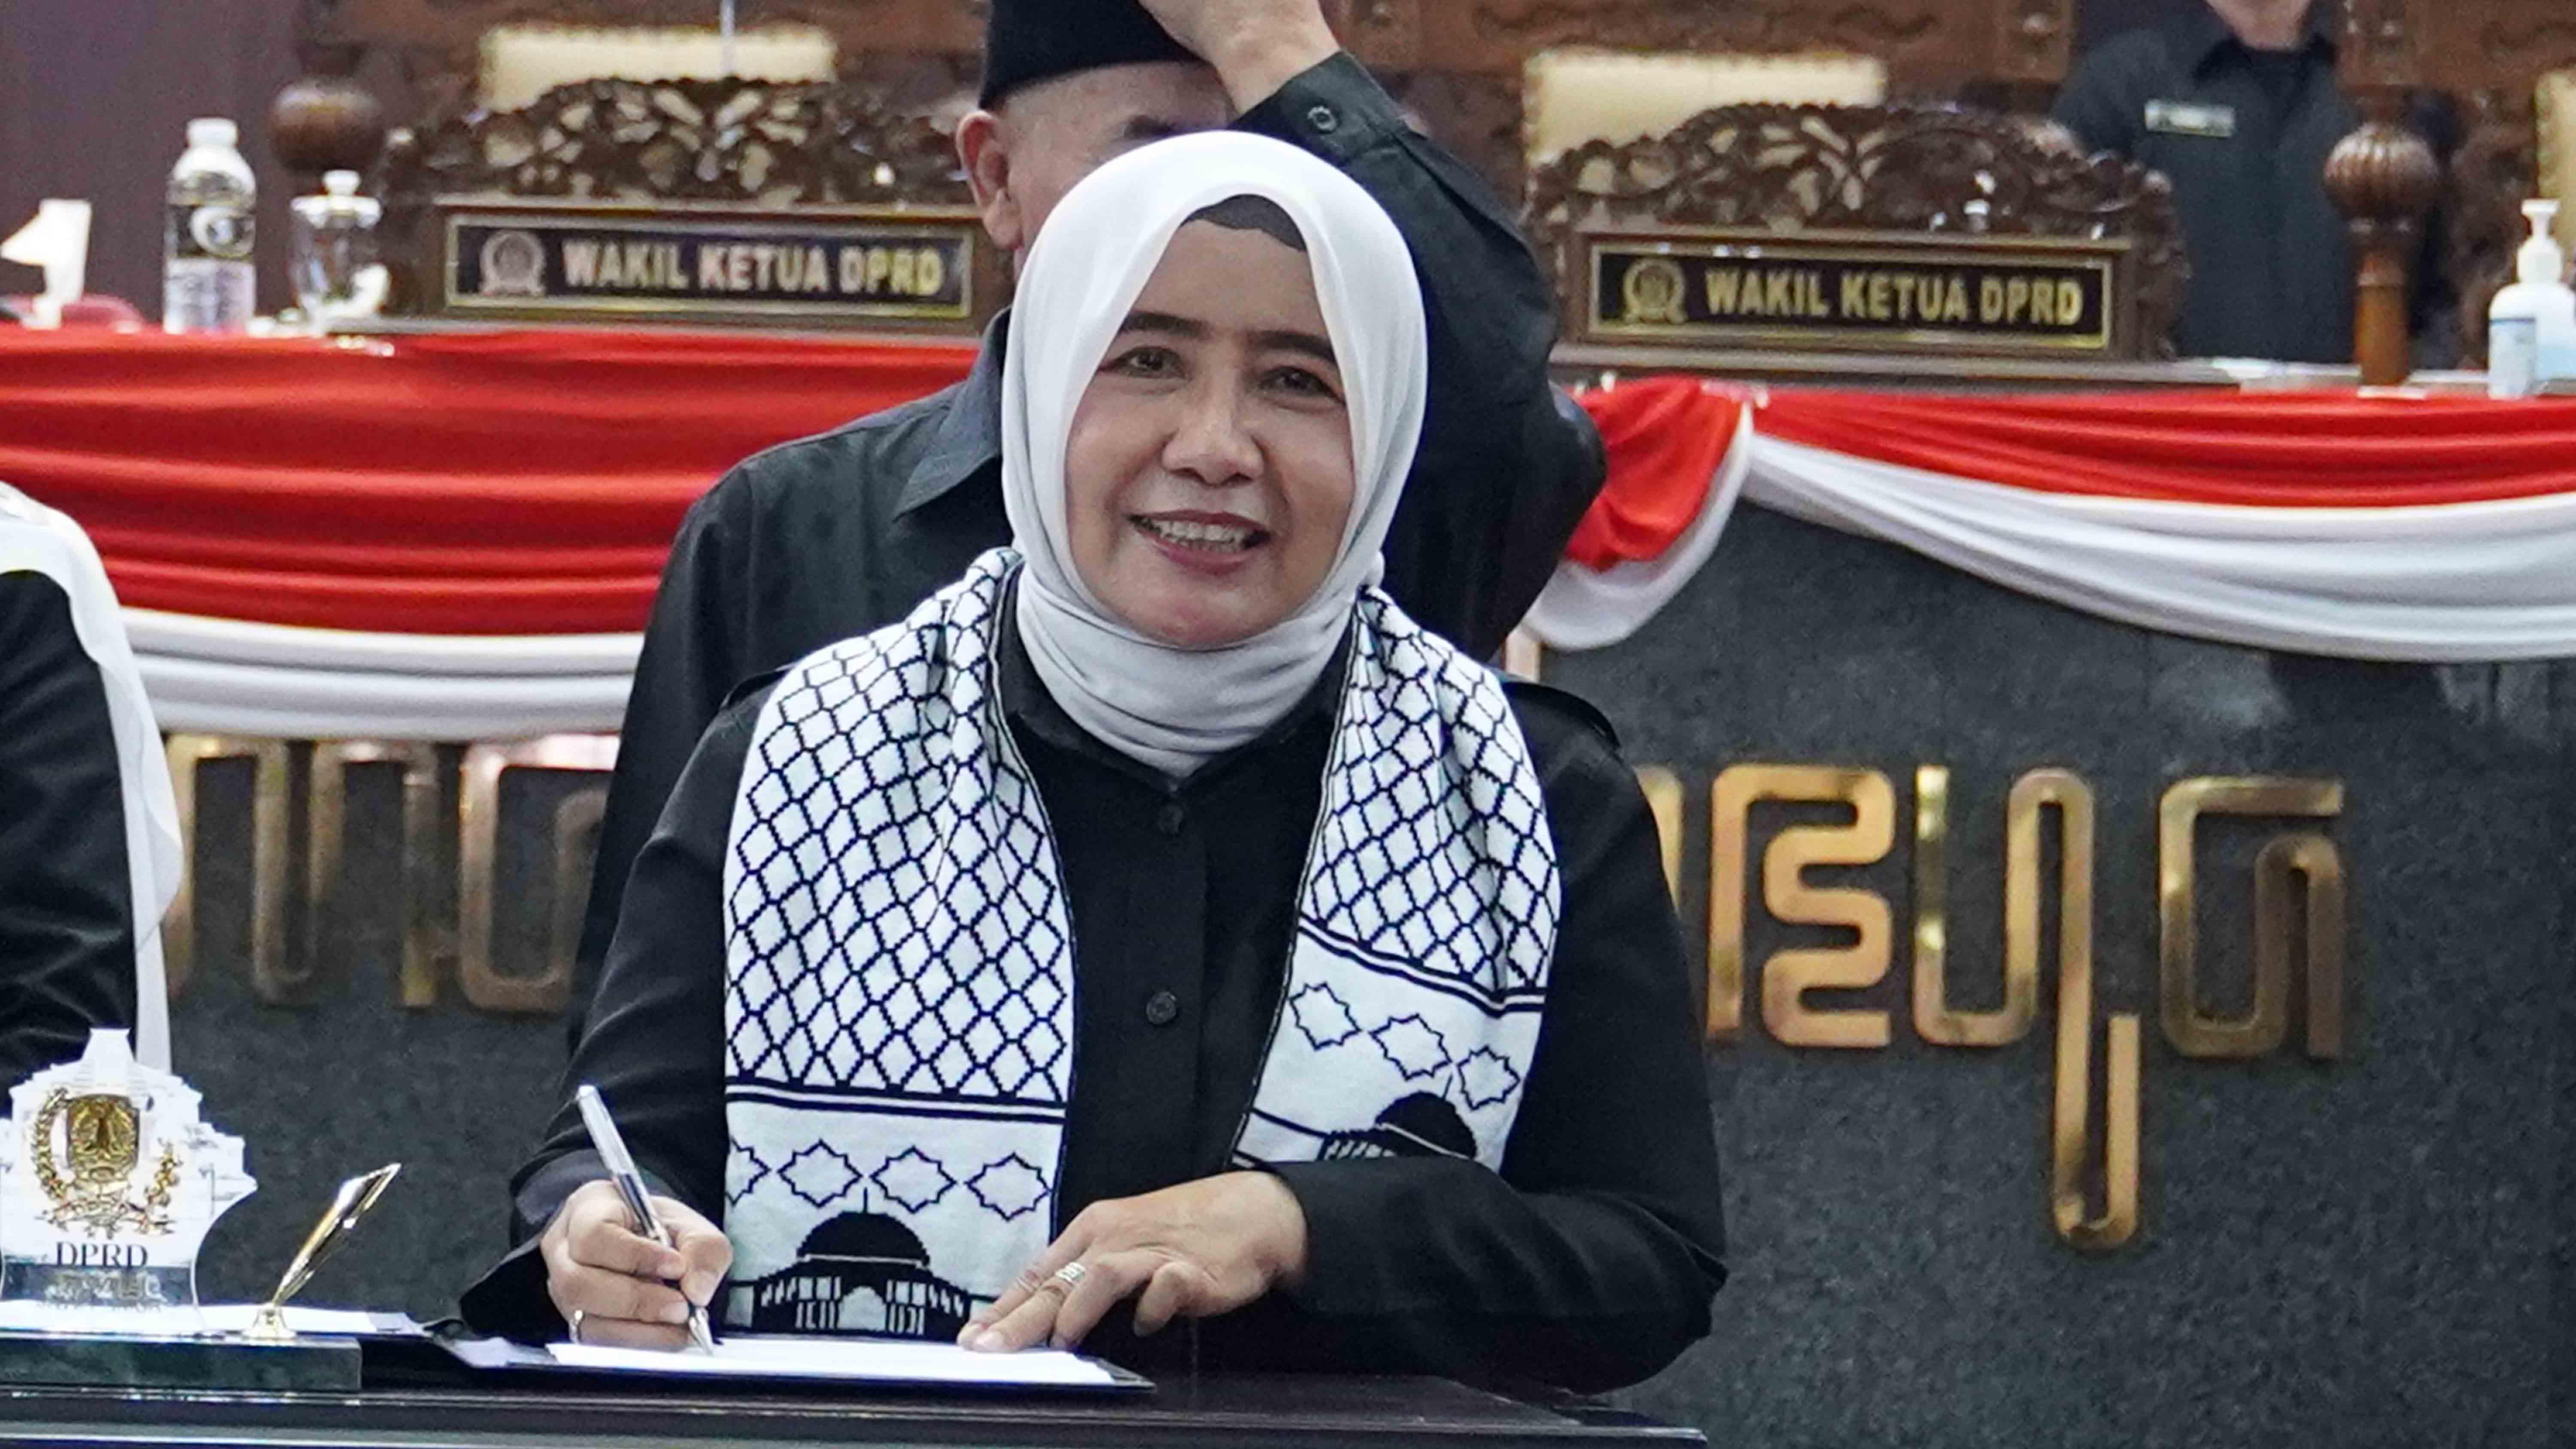 Wakil Ketua DPRD Jatim dari PKB Anik Maslachah